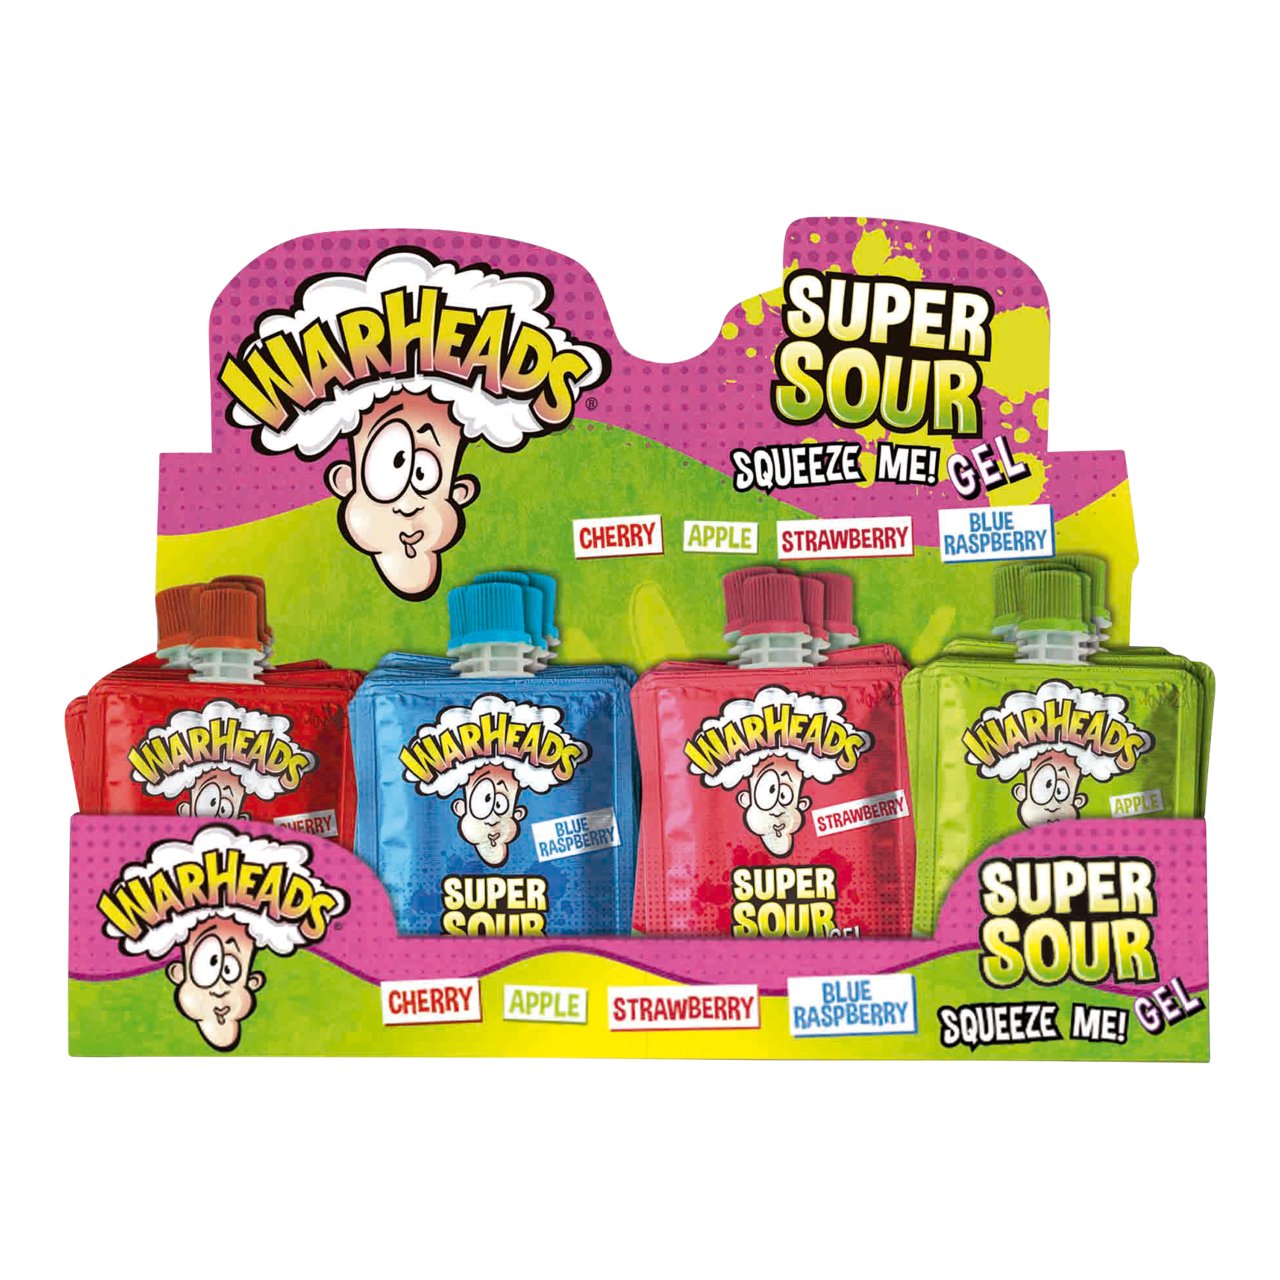 Warheads super sour squeeze gel